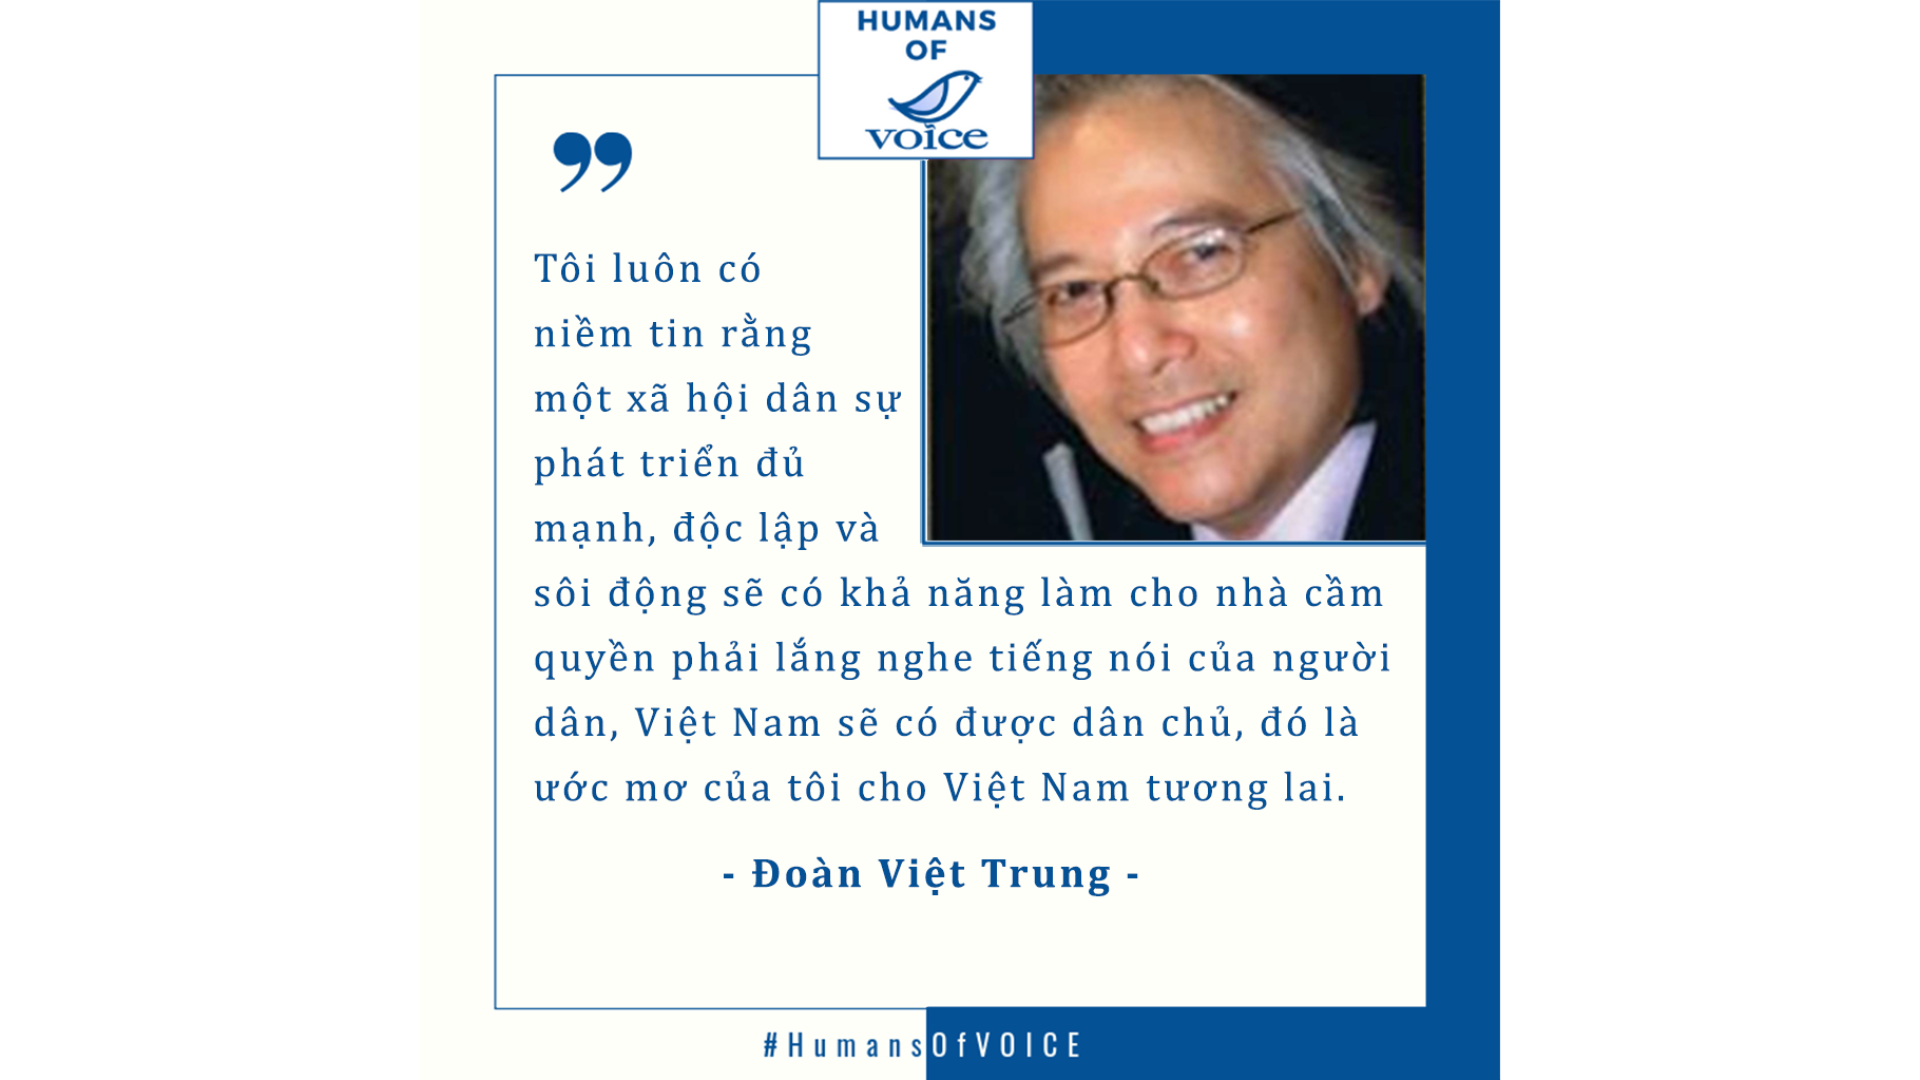 Humans of VOICE: Doan Viet Trung